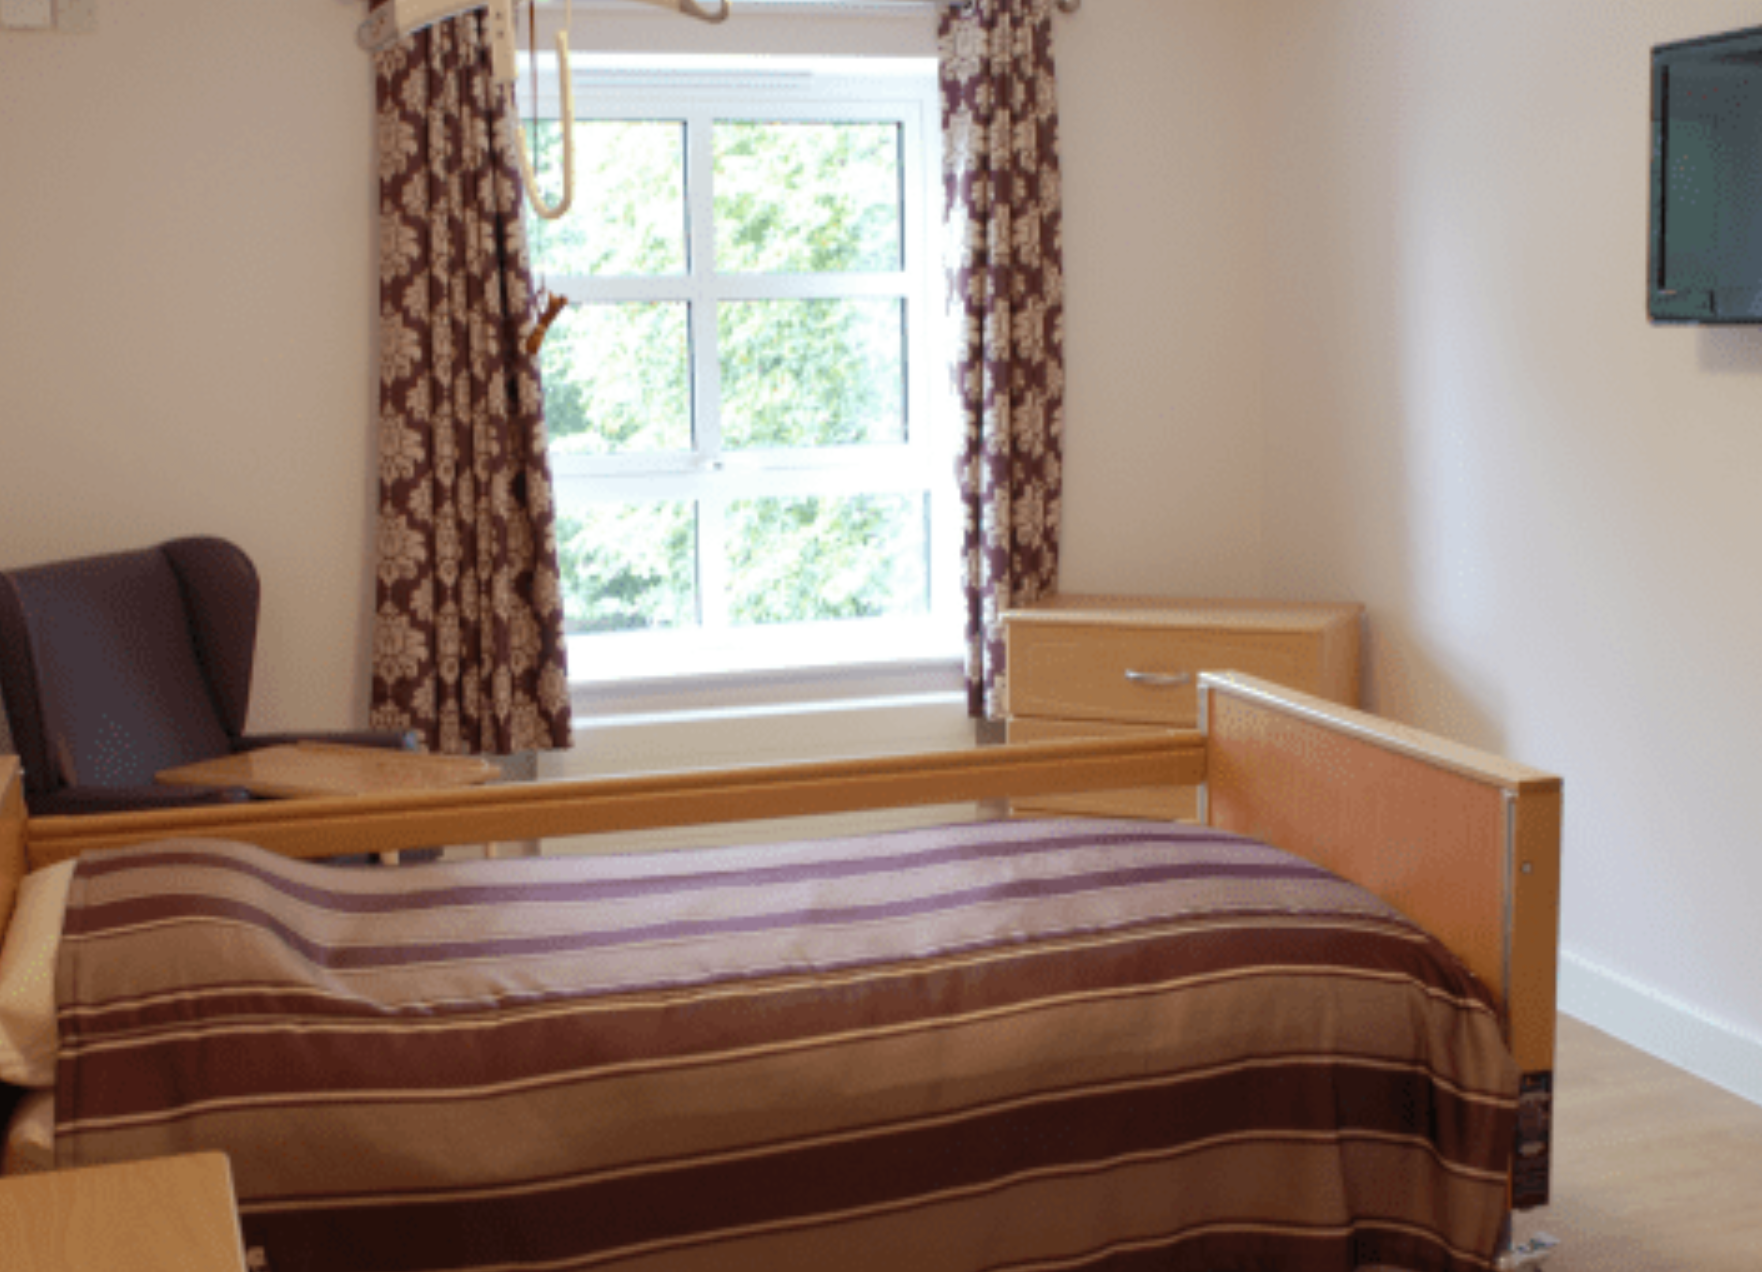 Bedroom of Halden Heights care community in Ashford, Kent